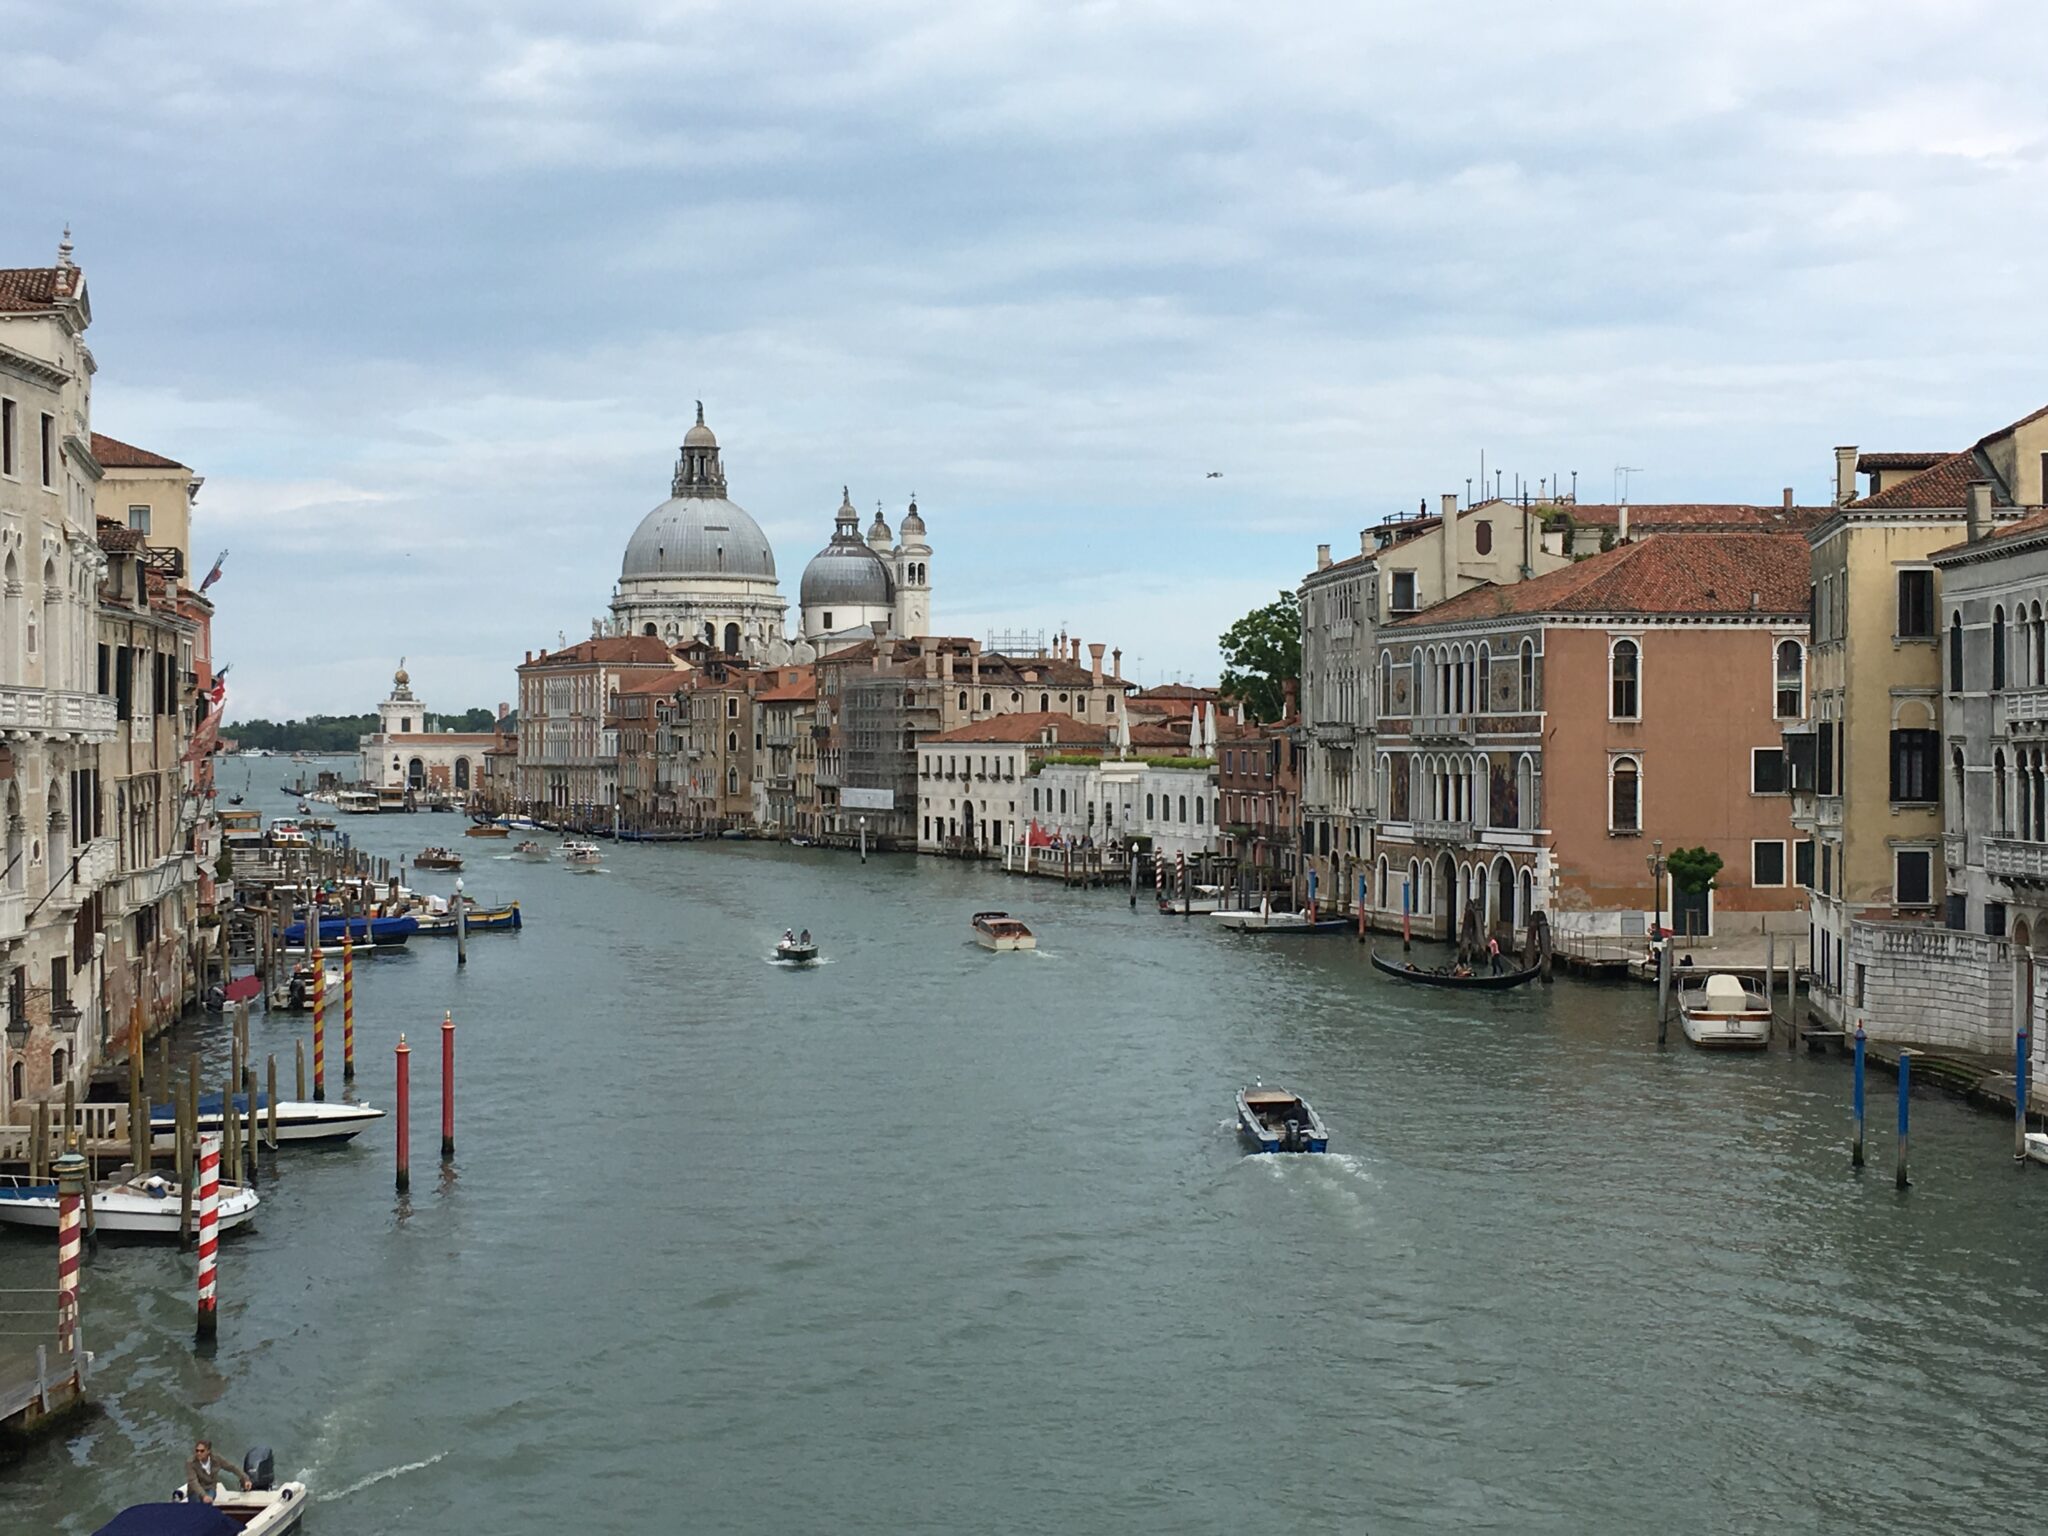 Photograph of Venice